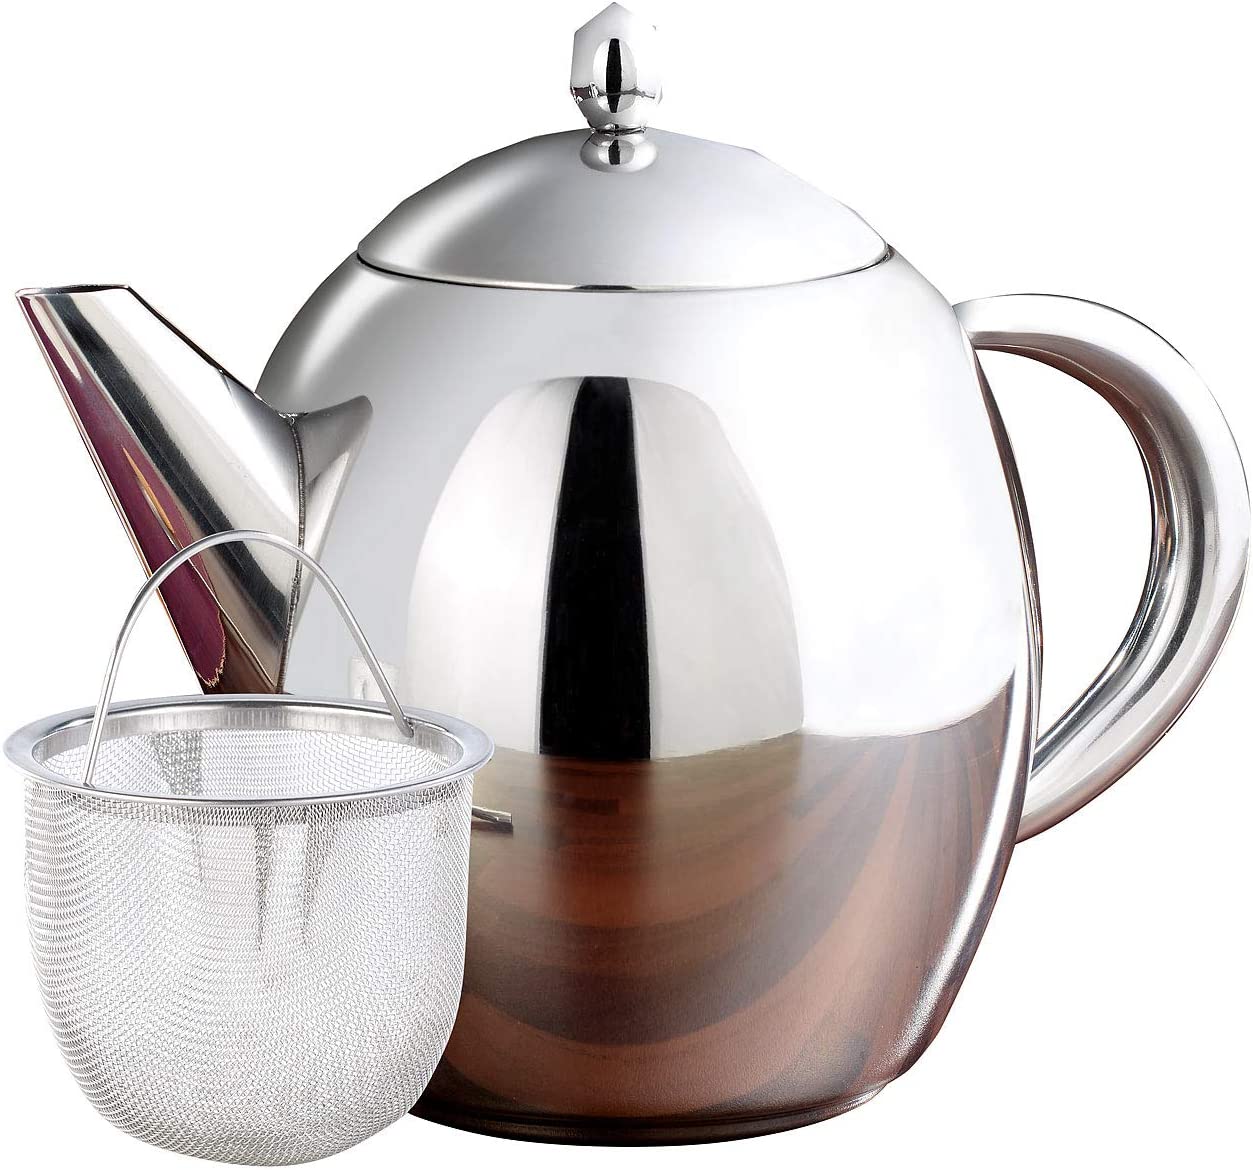 & Rosenstein Sons Teapot with Filter 1 Litre